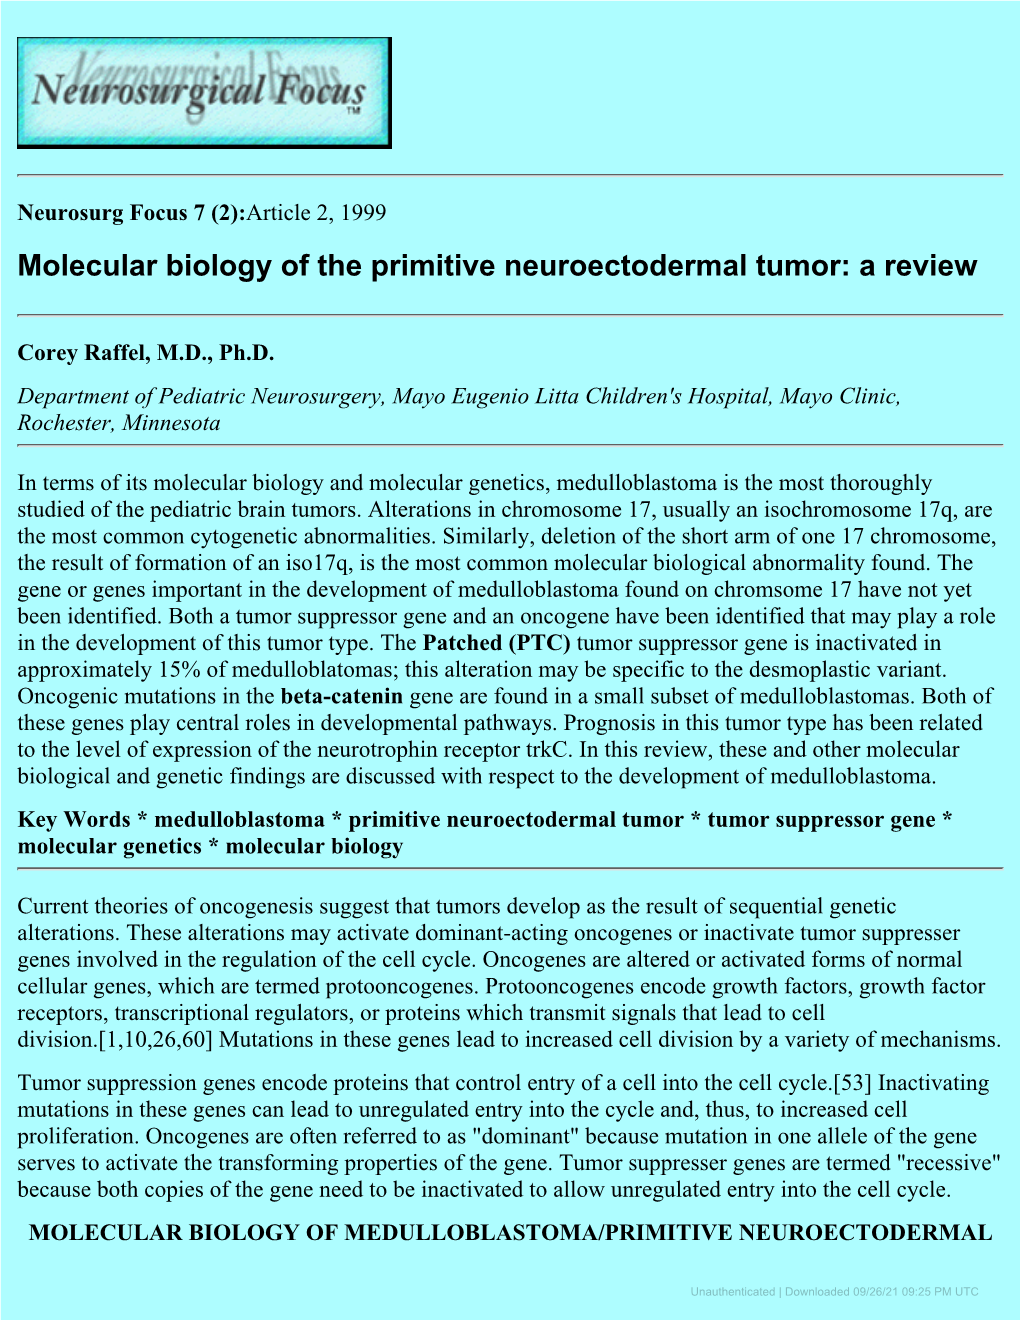 Molecular Biology of the Primitive Neuroectodermal Tumor: a Review